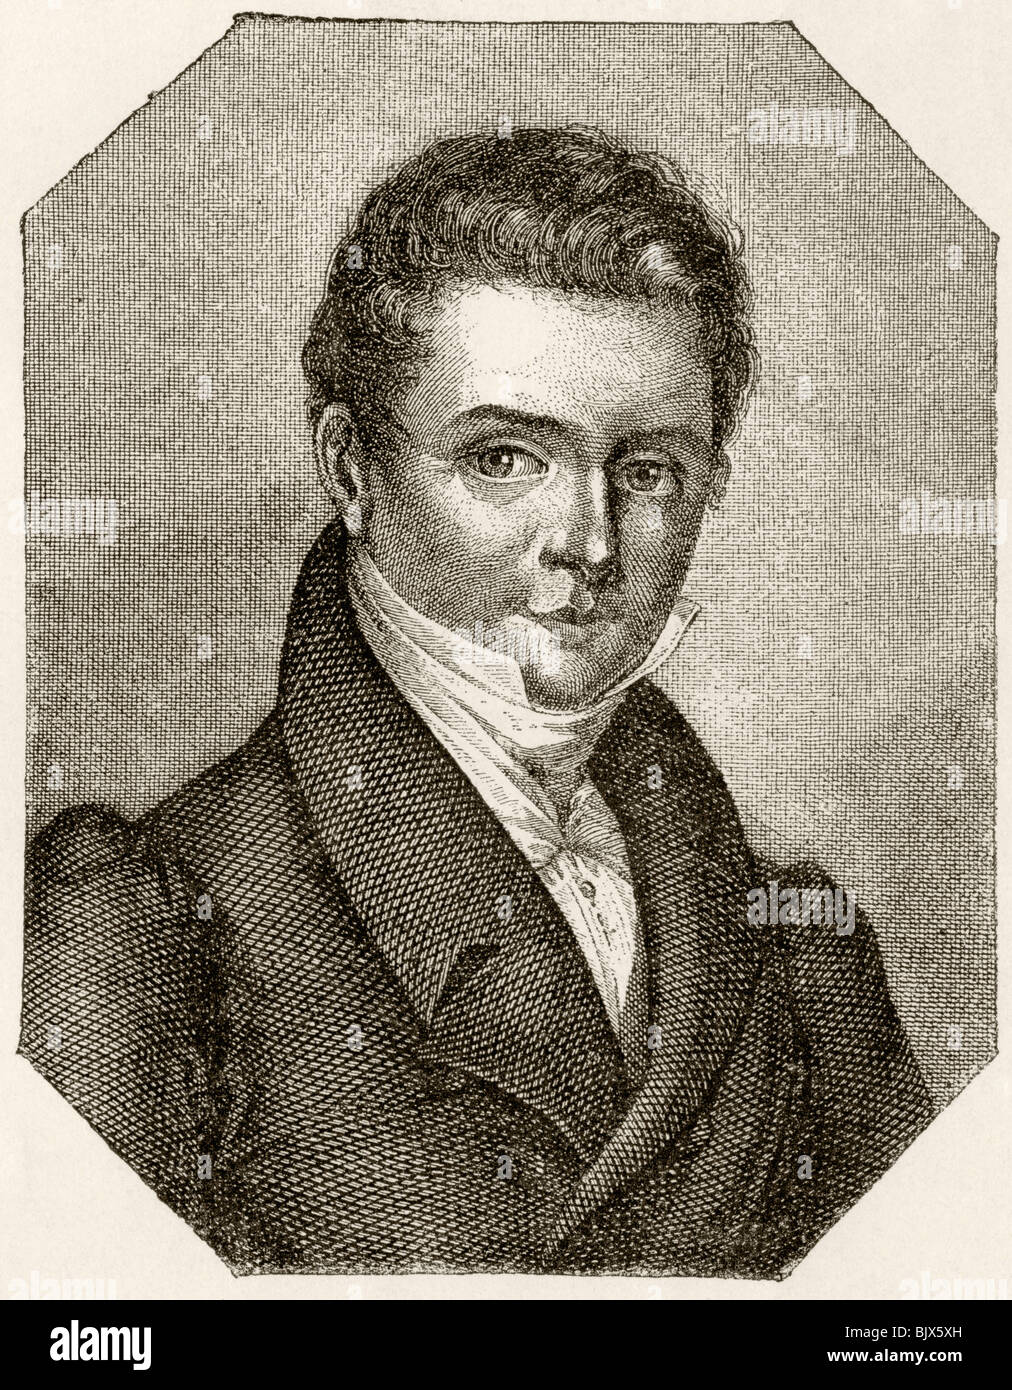 Washington Irving 1783 - 1859. American author. Stock Photo